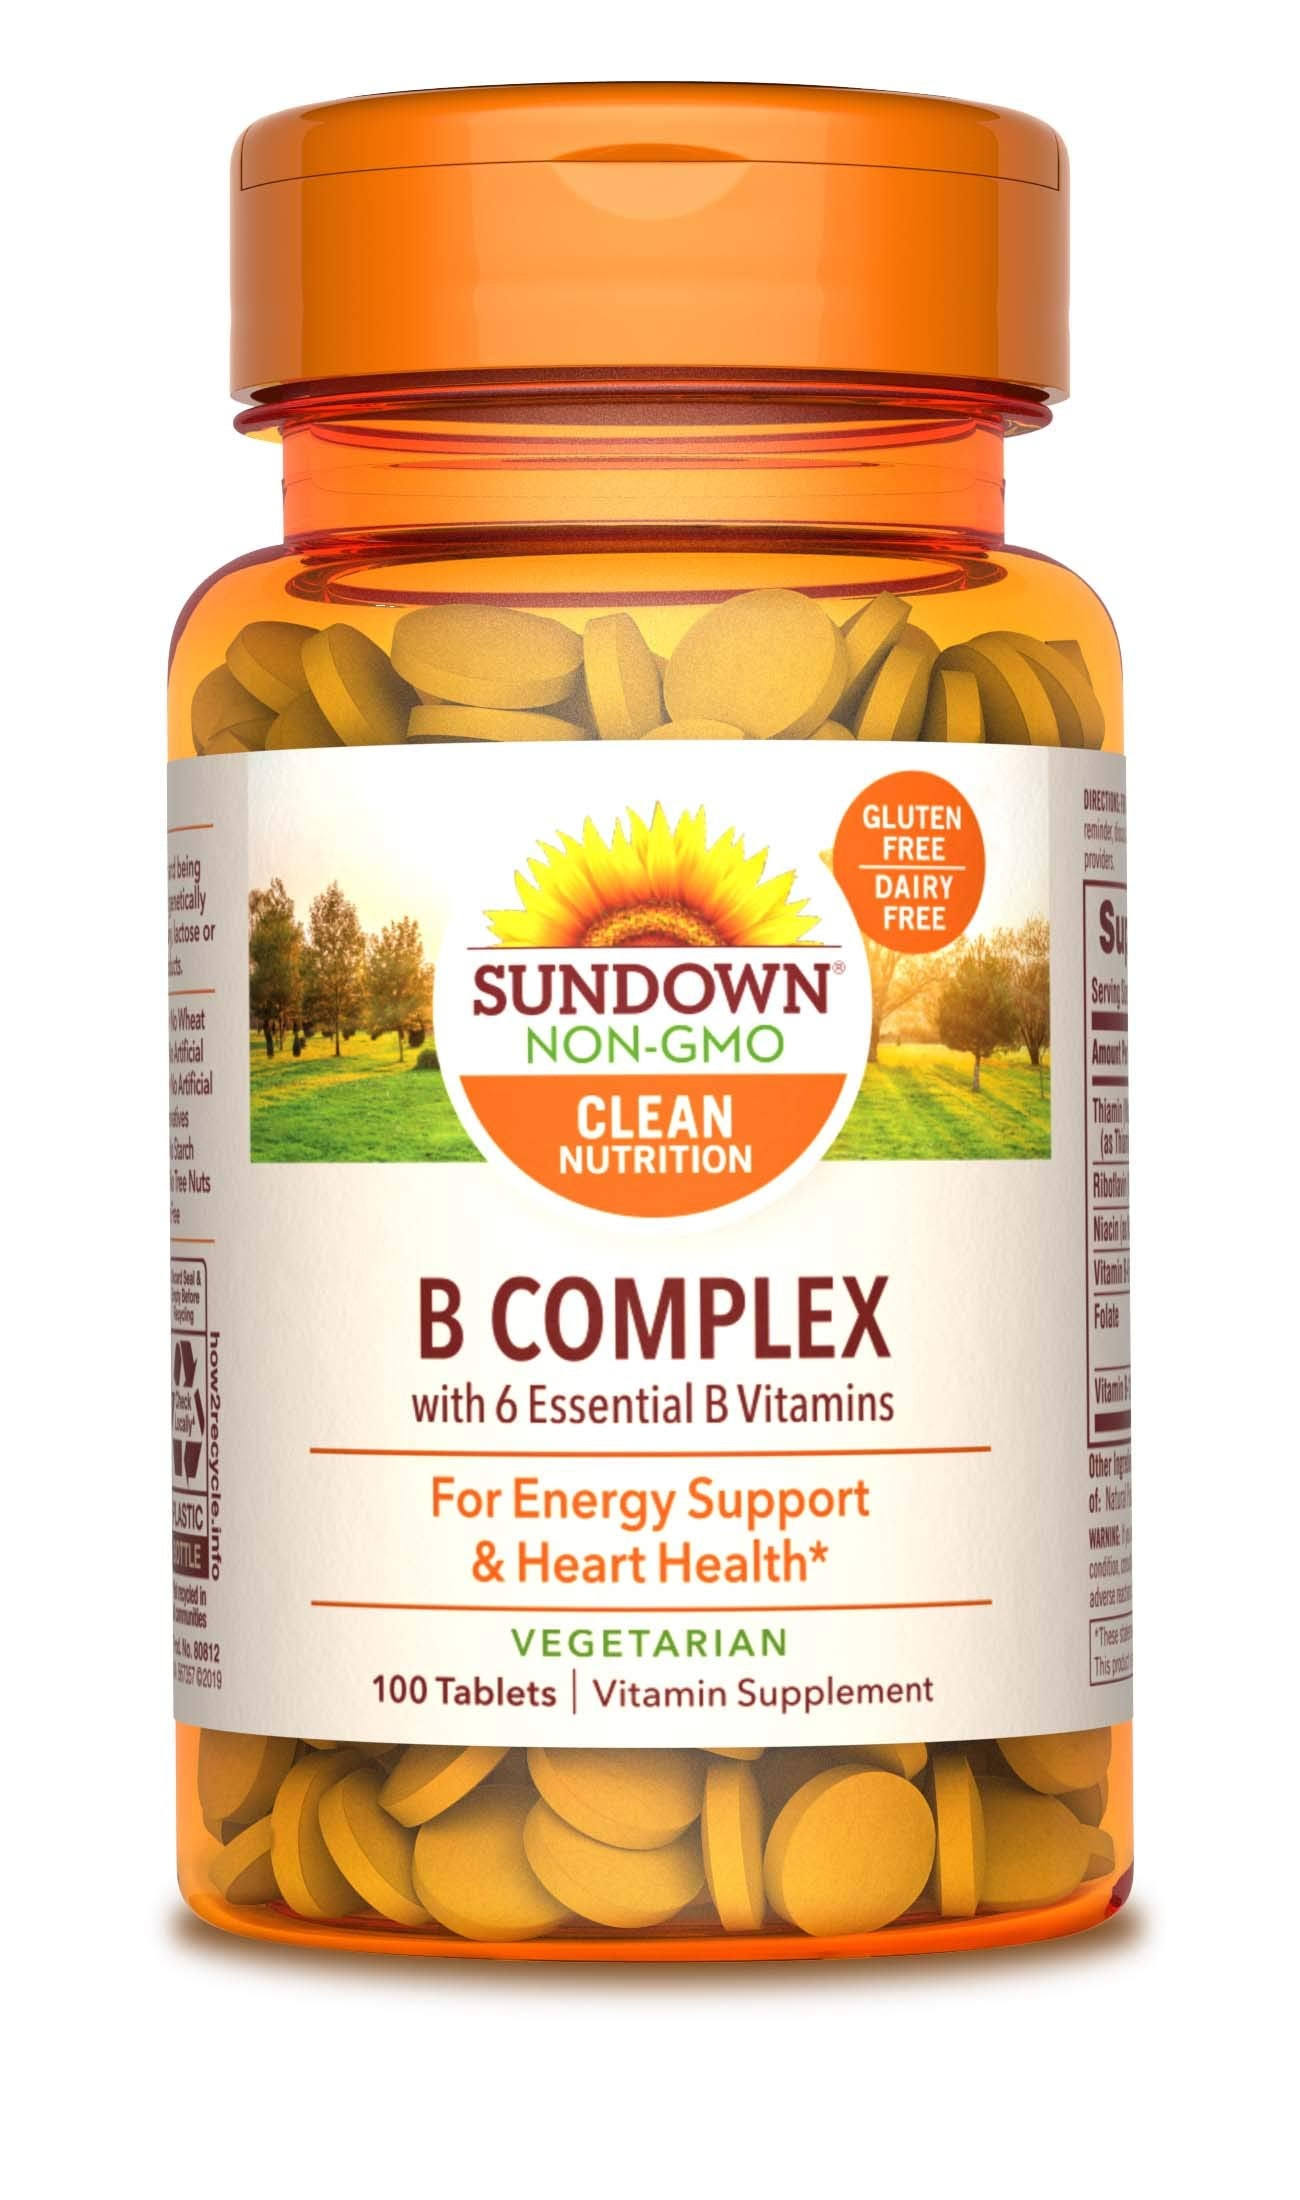 Sundown Naturals B Complex Dietary Supplement - 100ct